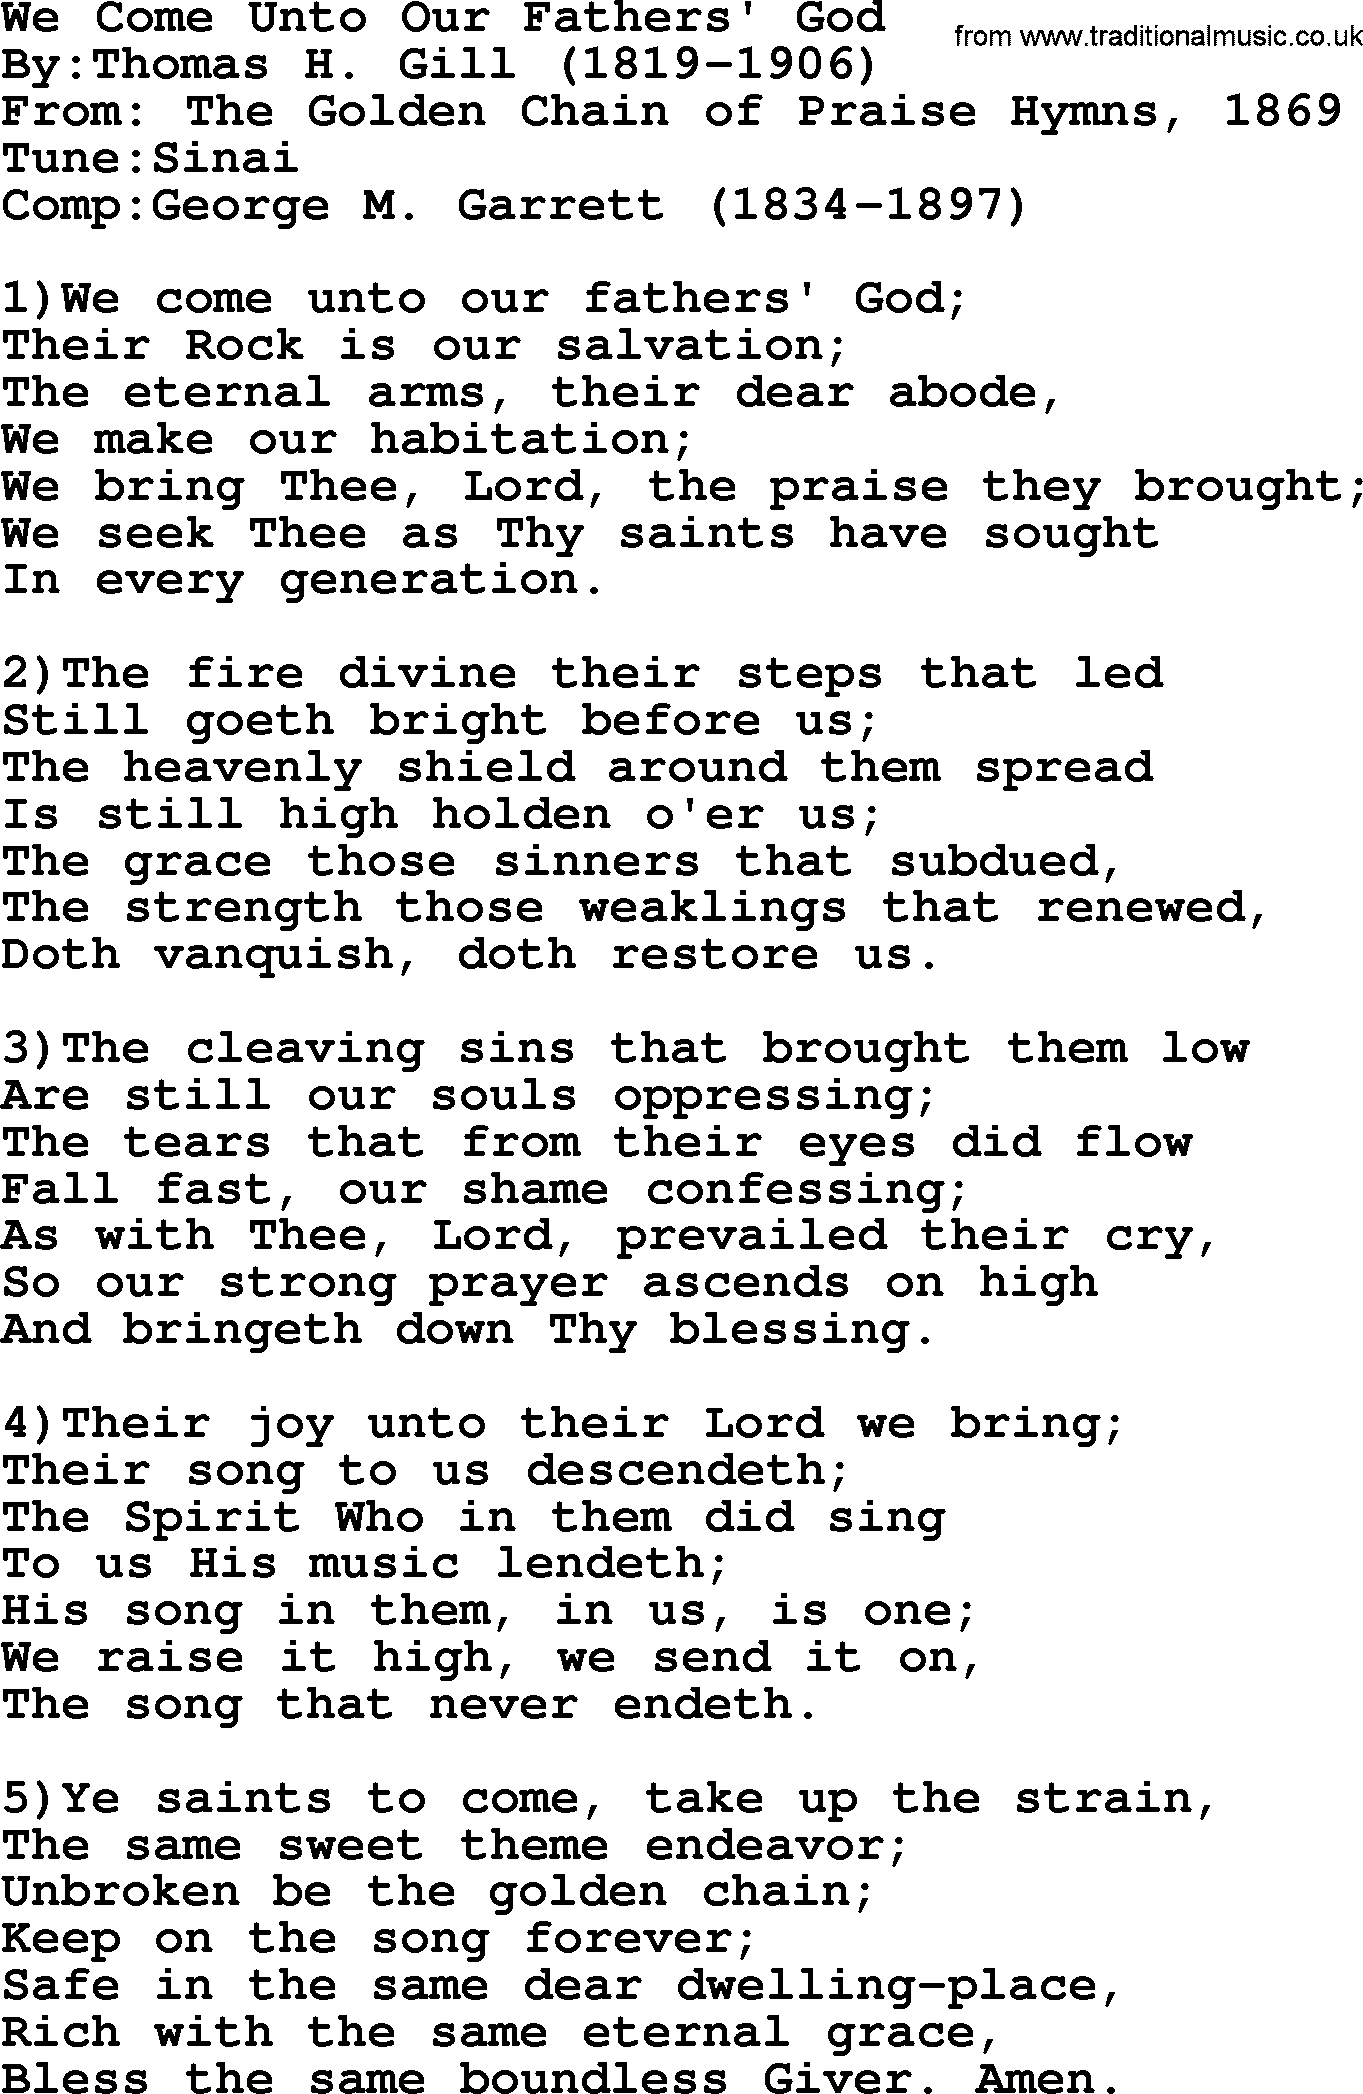 Methodist Hymn: We Come Unto Our Fathers' God, lyrics